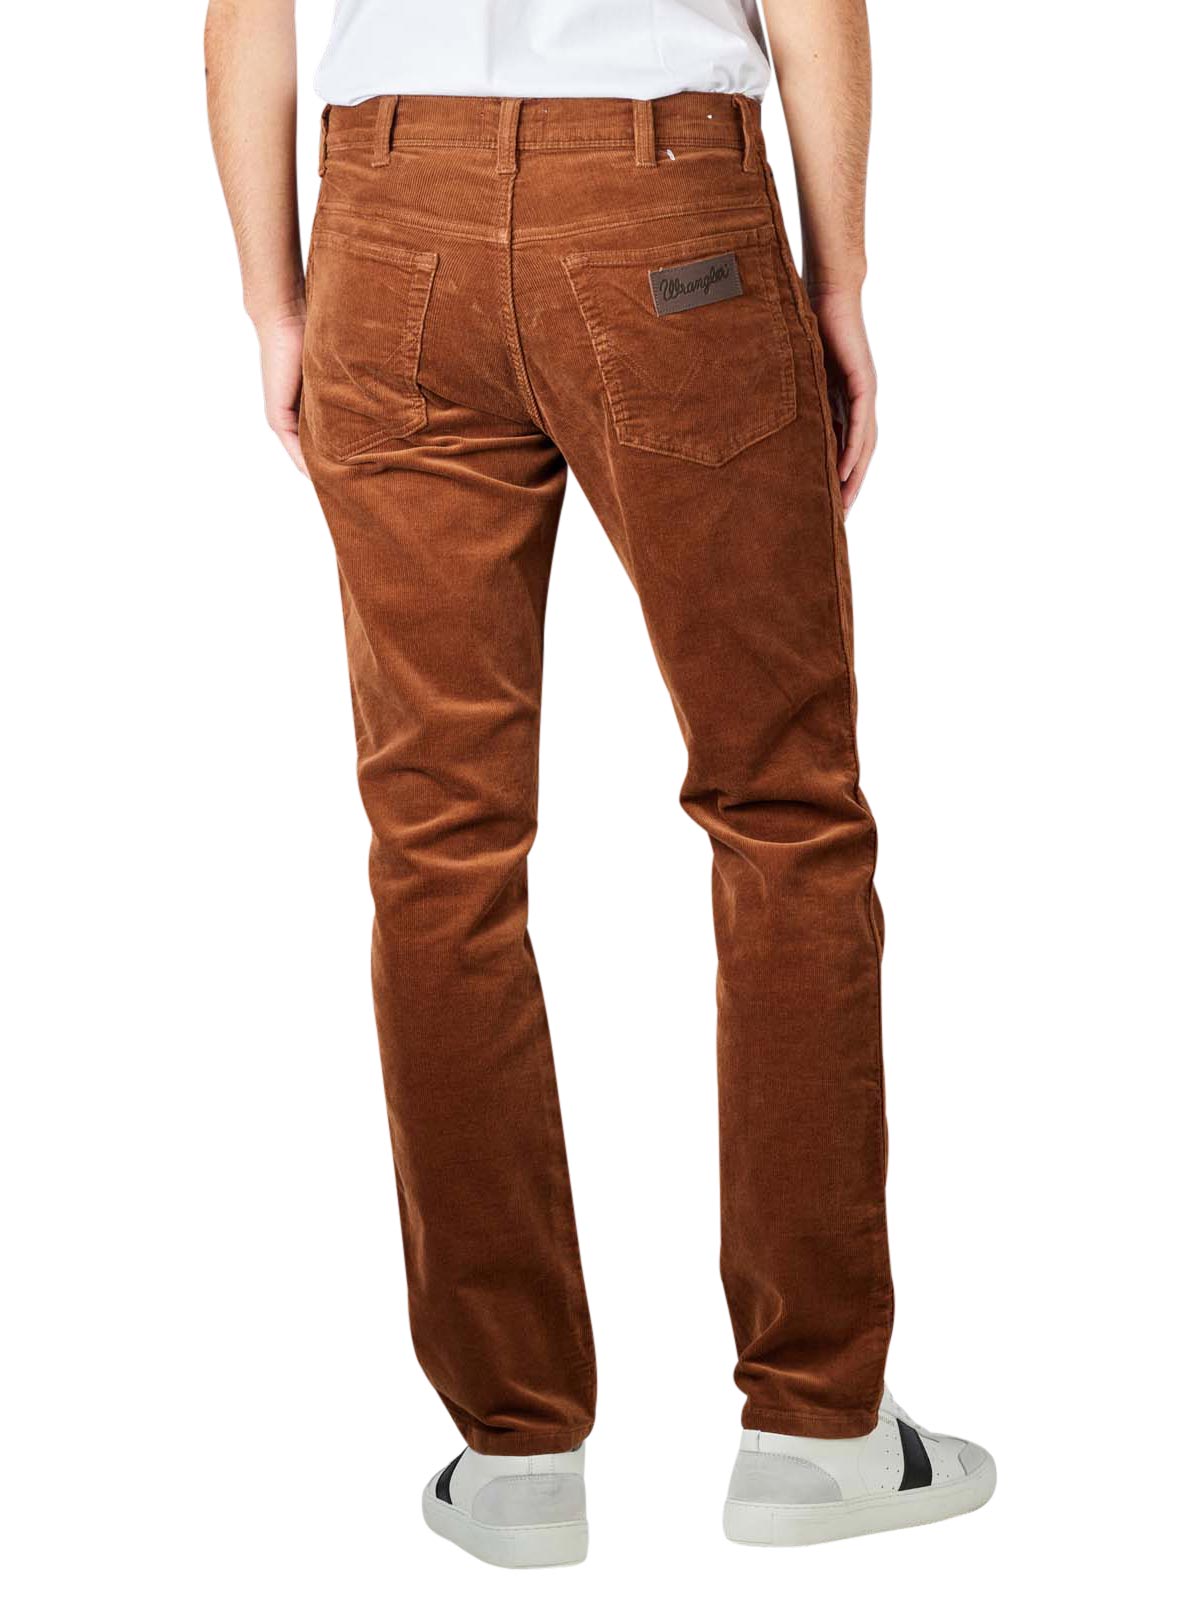 Wrangler Texas Slim Jeans tawny brown Wrangler Men's Jeans | Free Shipping  on  - SIMPLY LOOK GOOD